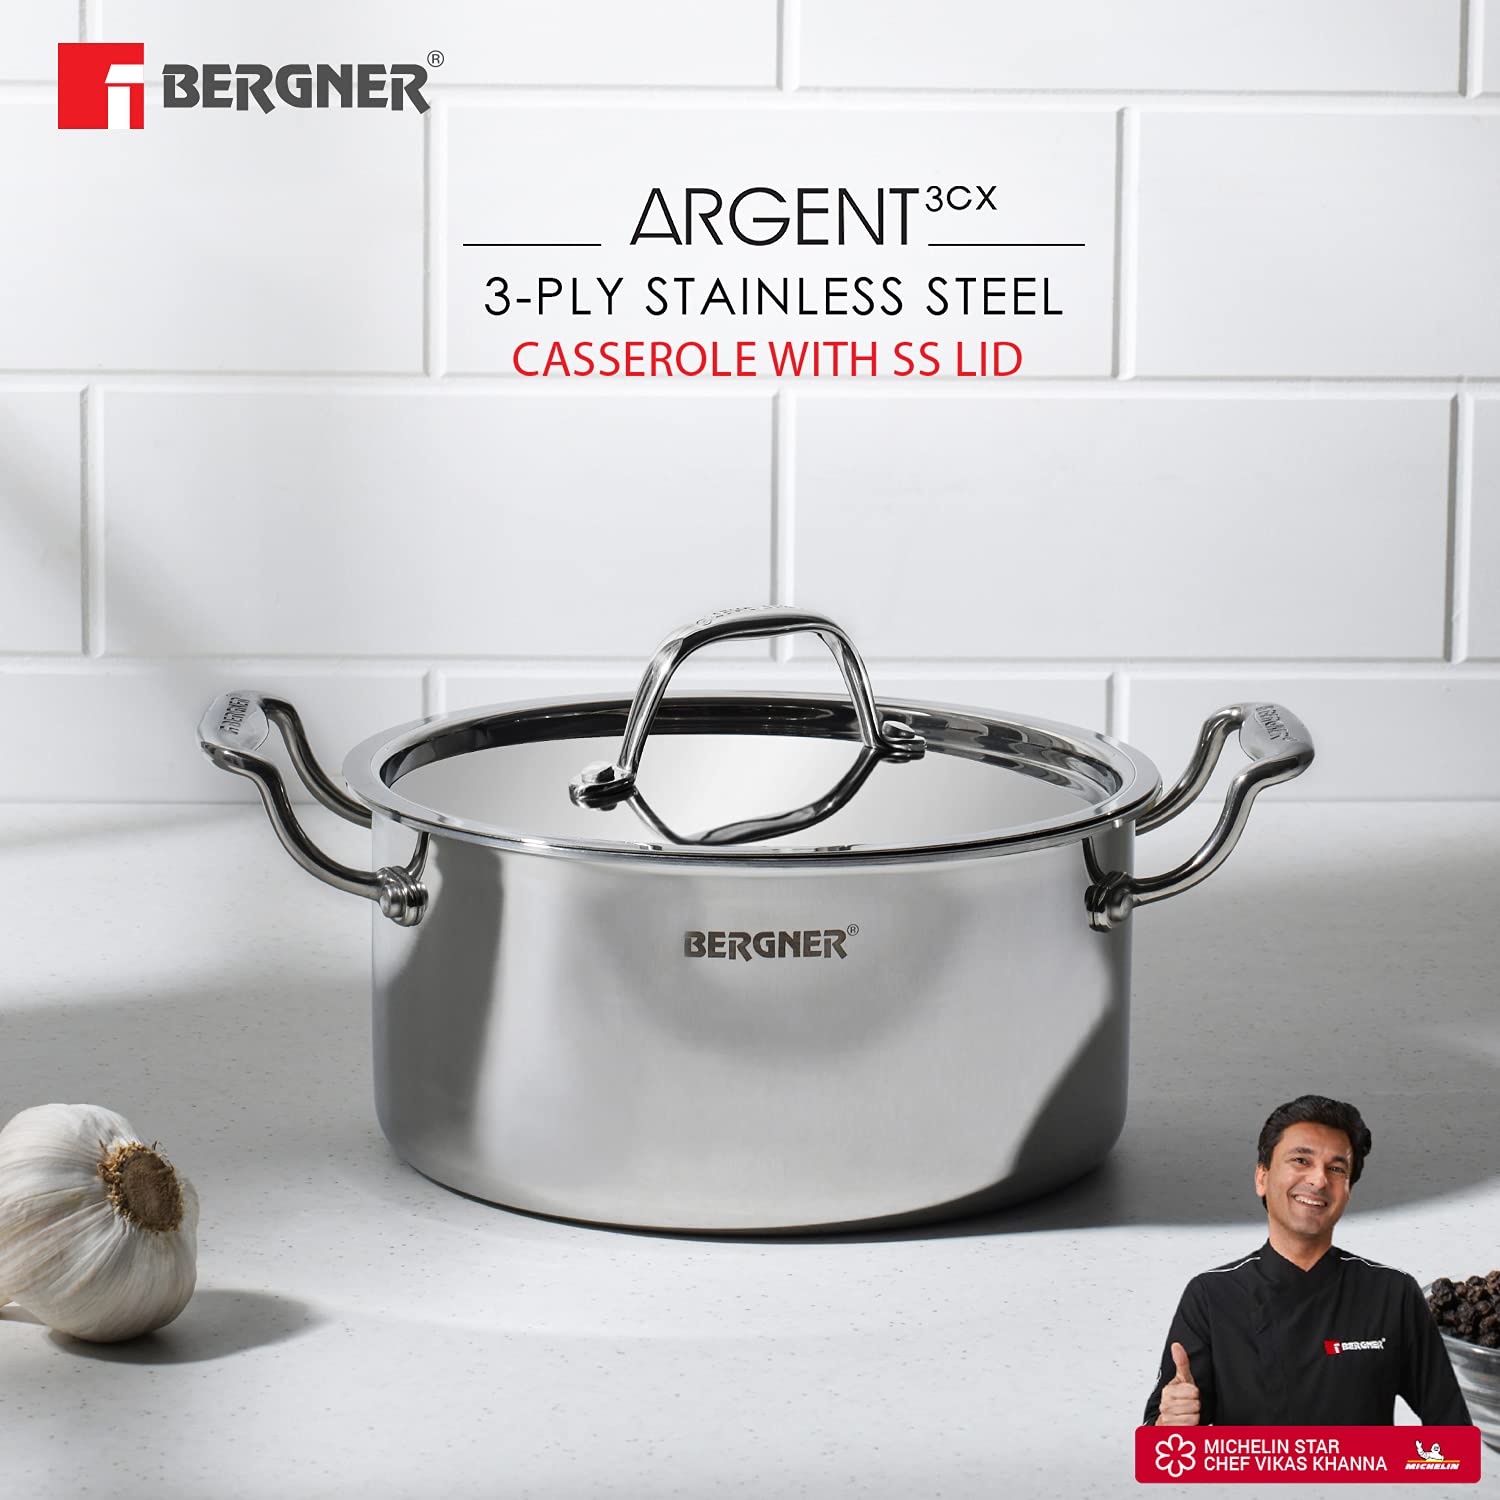 Bergner Triply Stainless Steel Cookware Combo - Casserole, Casserole & Sauce Pan